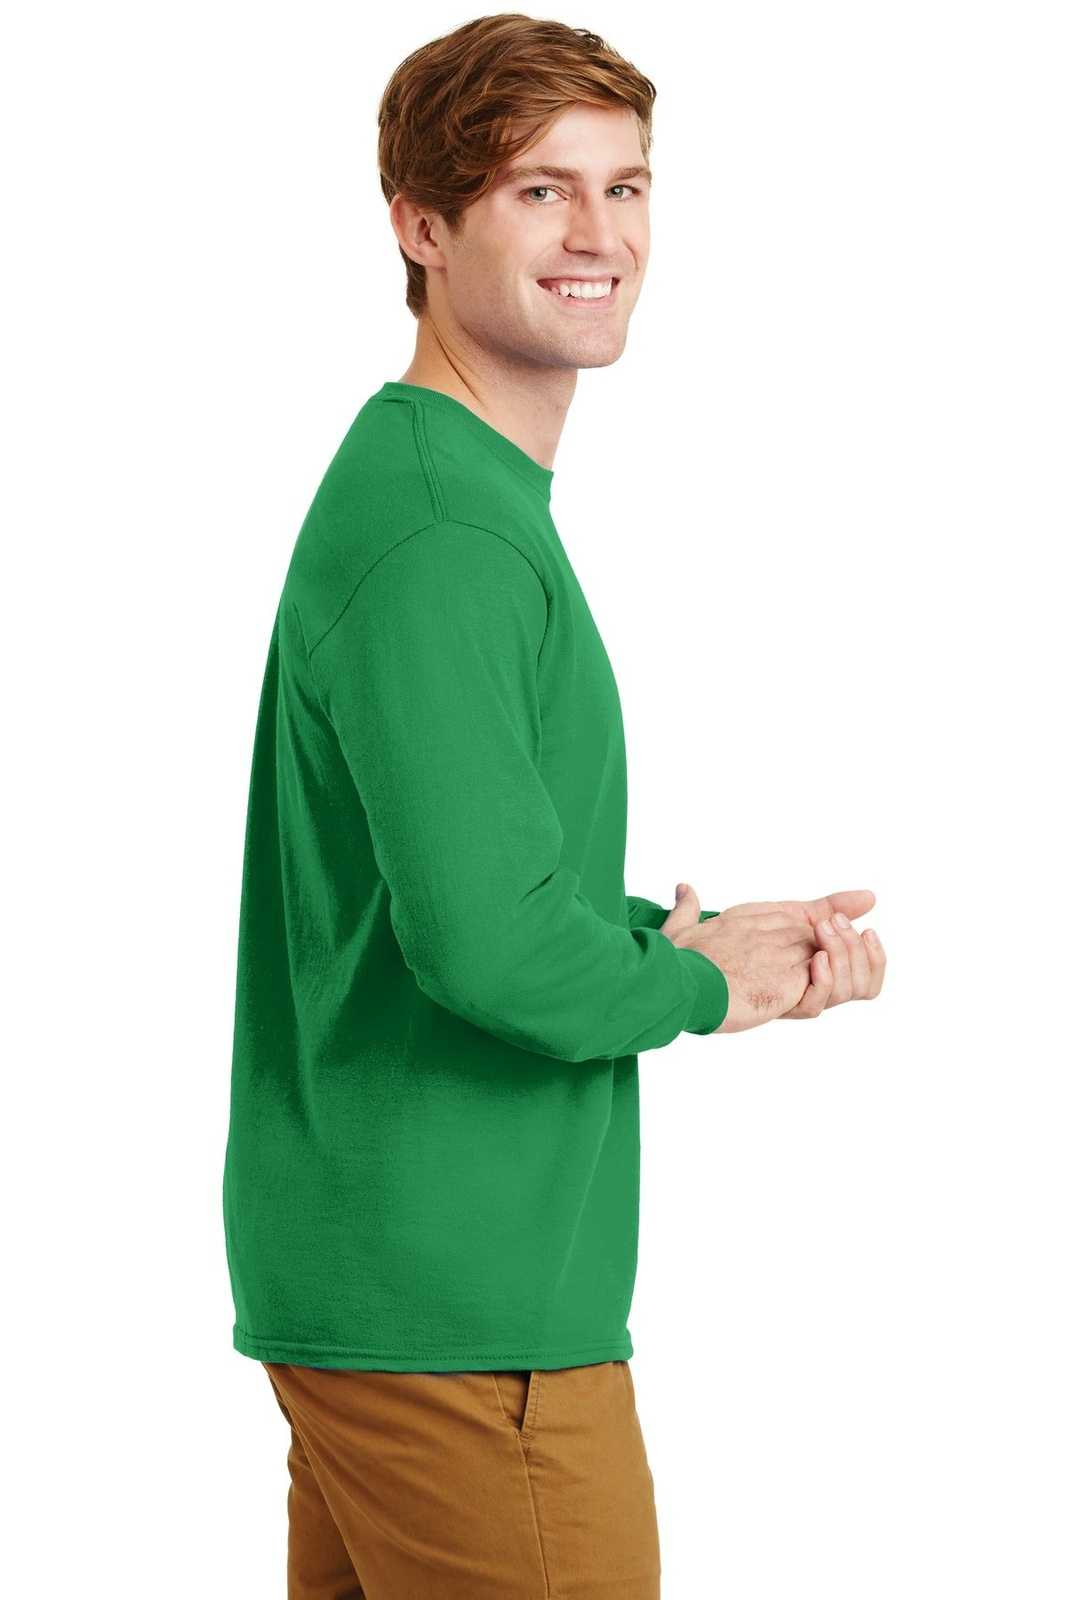 Gildan G2400 Ultra Cotton 100% Cotton Long Sleeve T-Shirt - Irish Green - HIT a Double